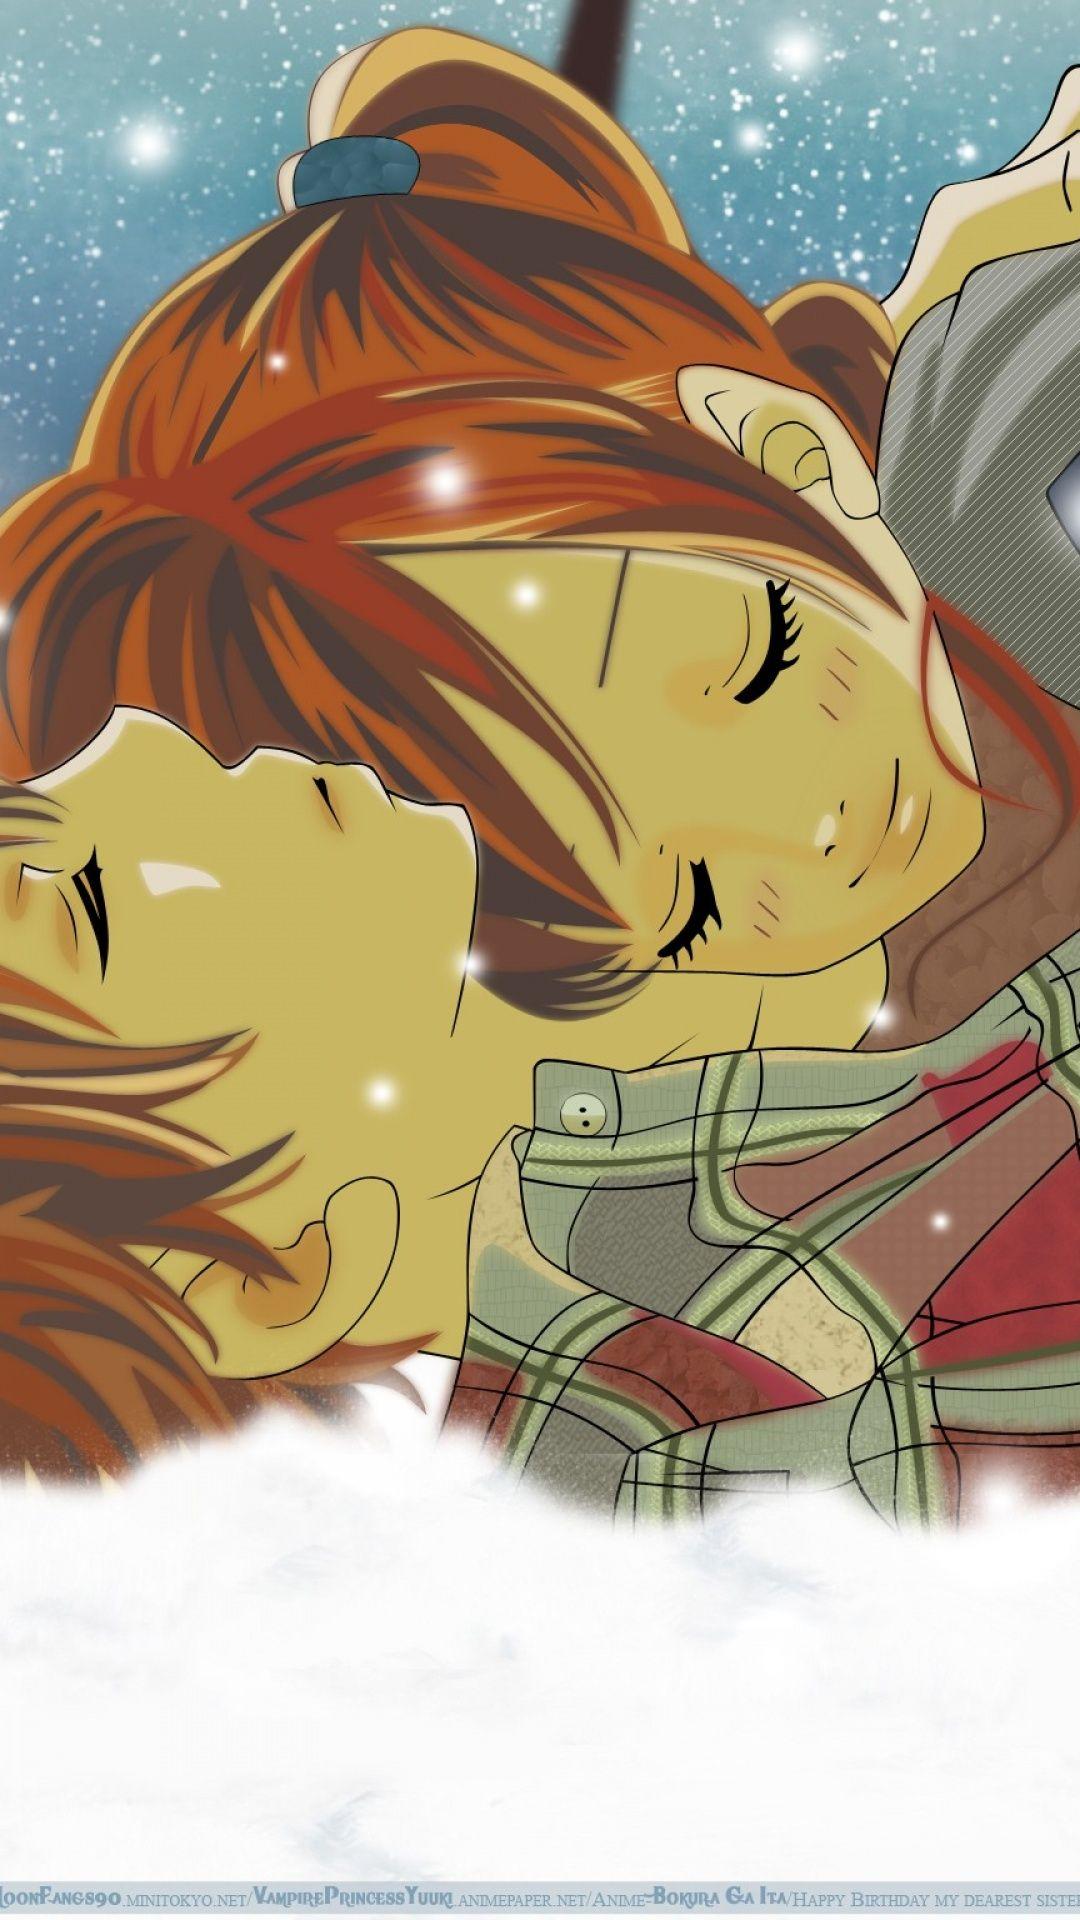 Romantic Anime iPhone wallpapers